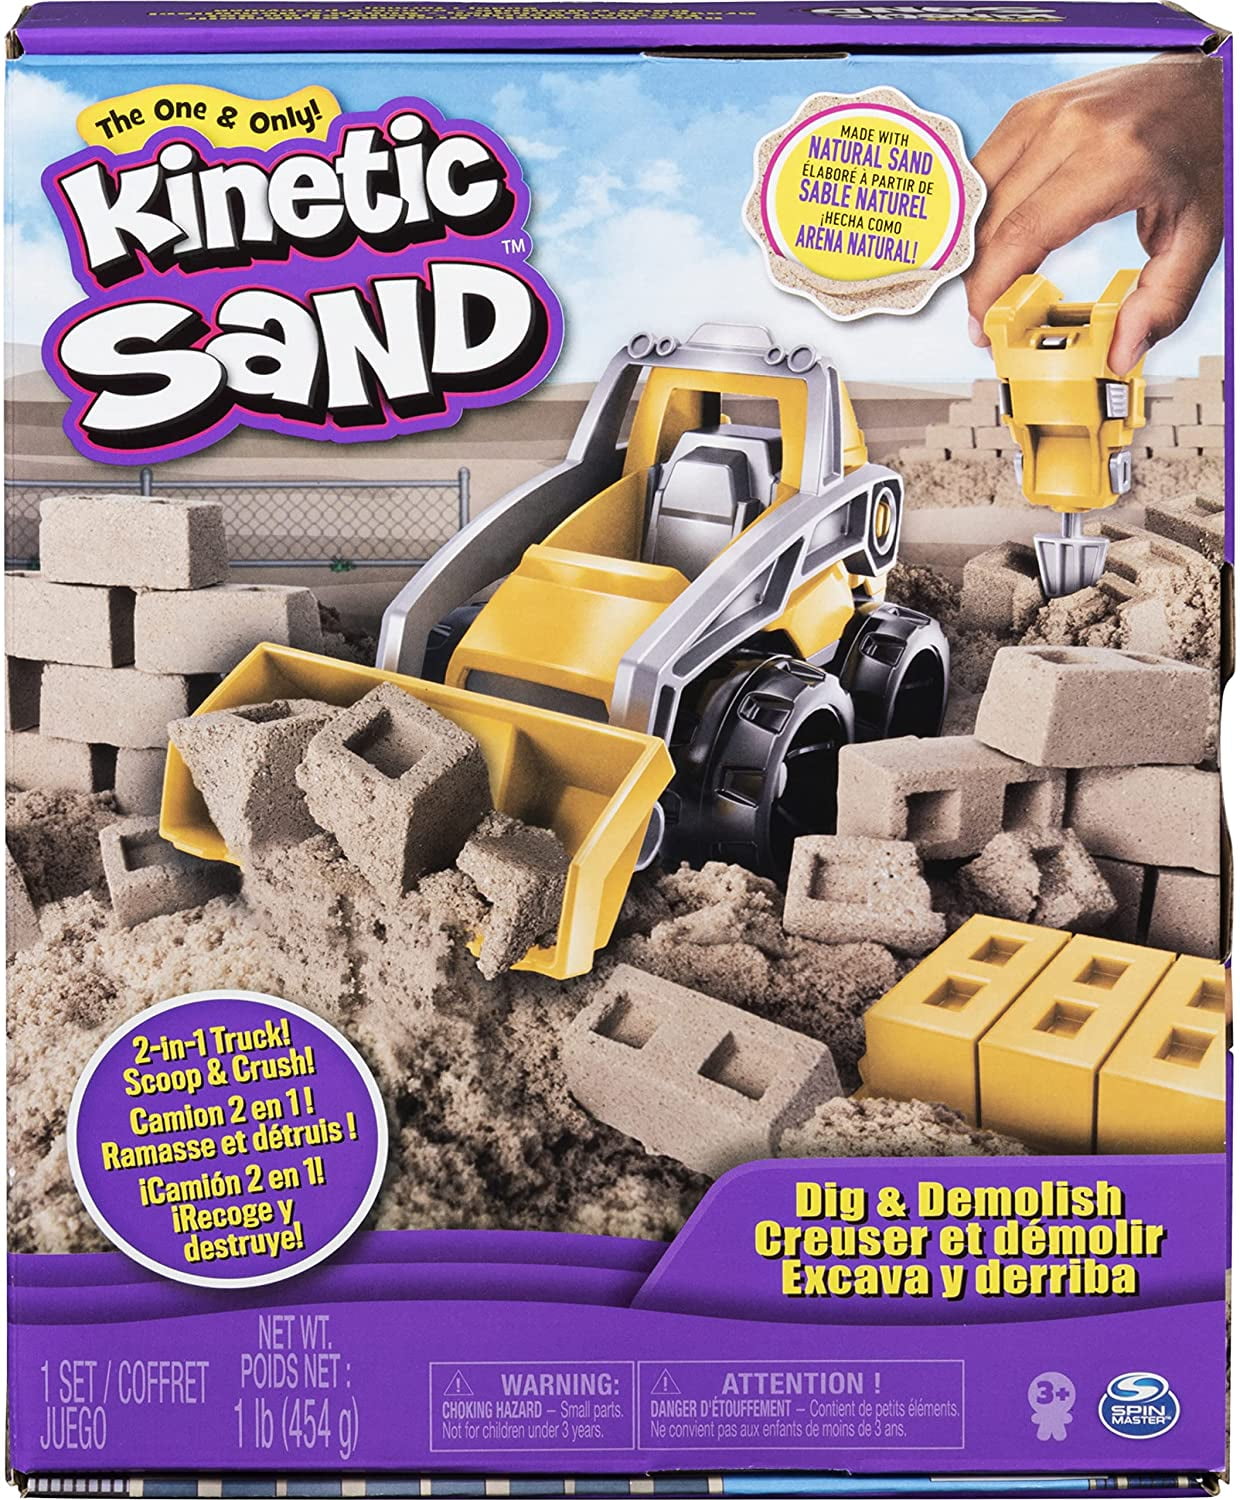 The Original Award Winning Can You Dig It Sand Tools!